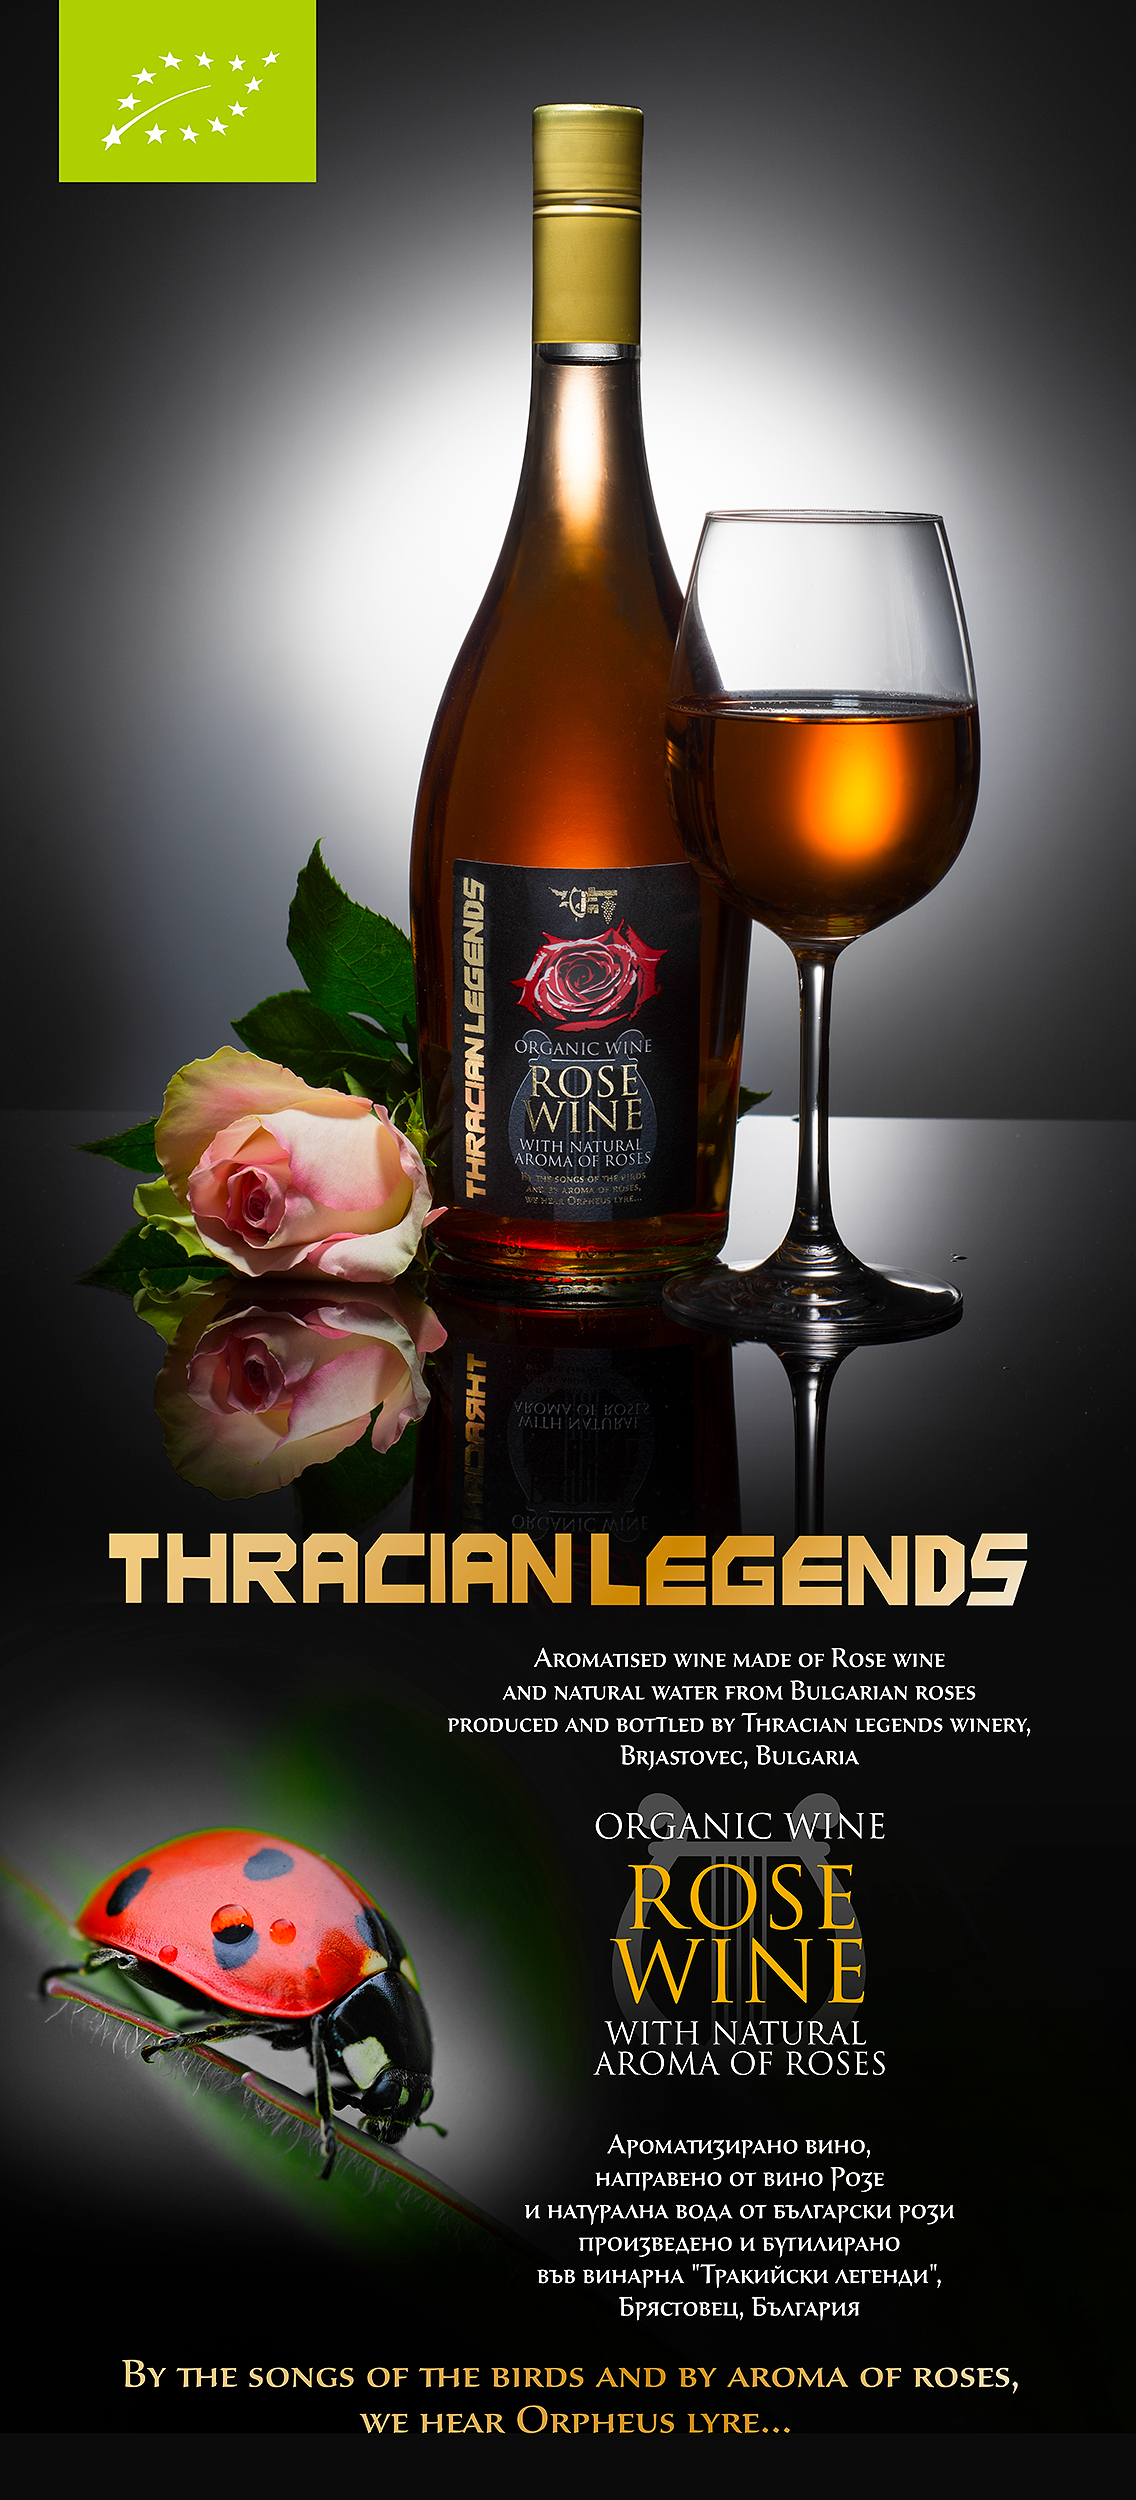 Thracian Legends Wines